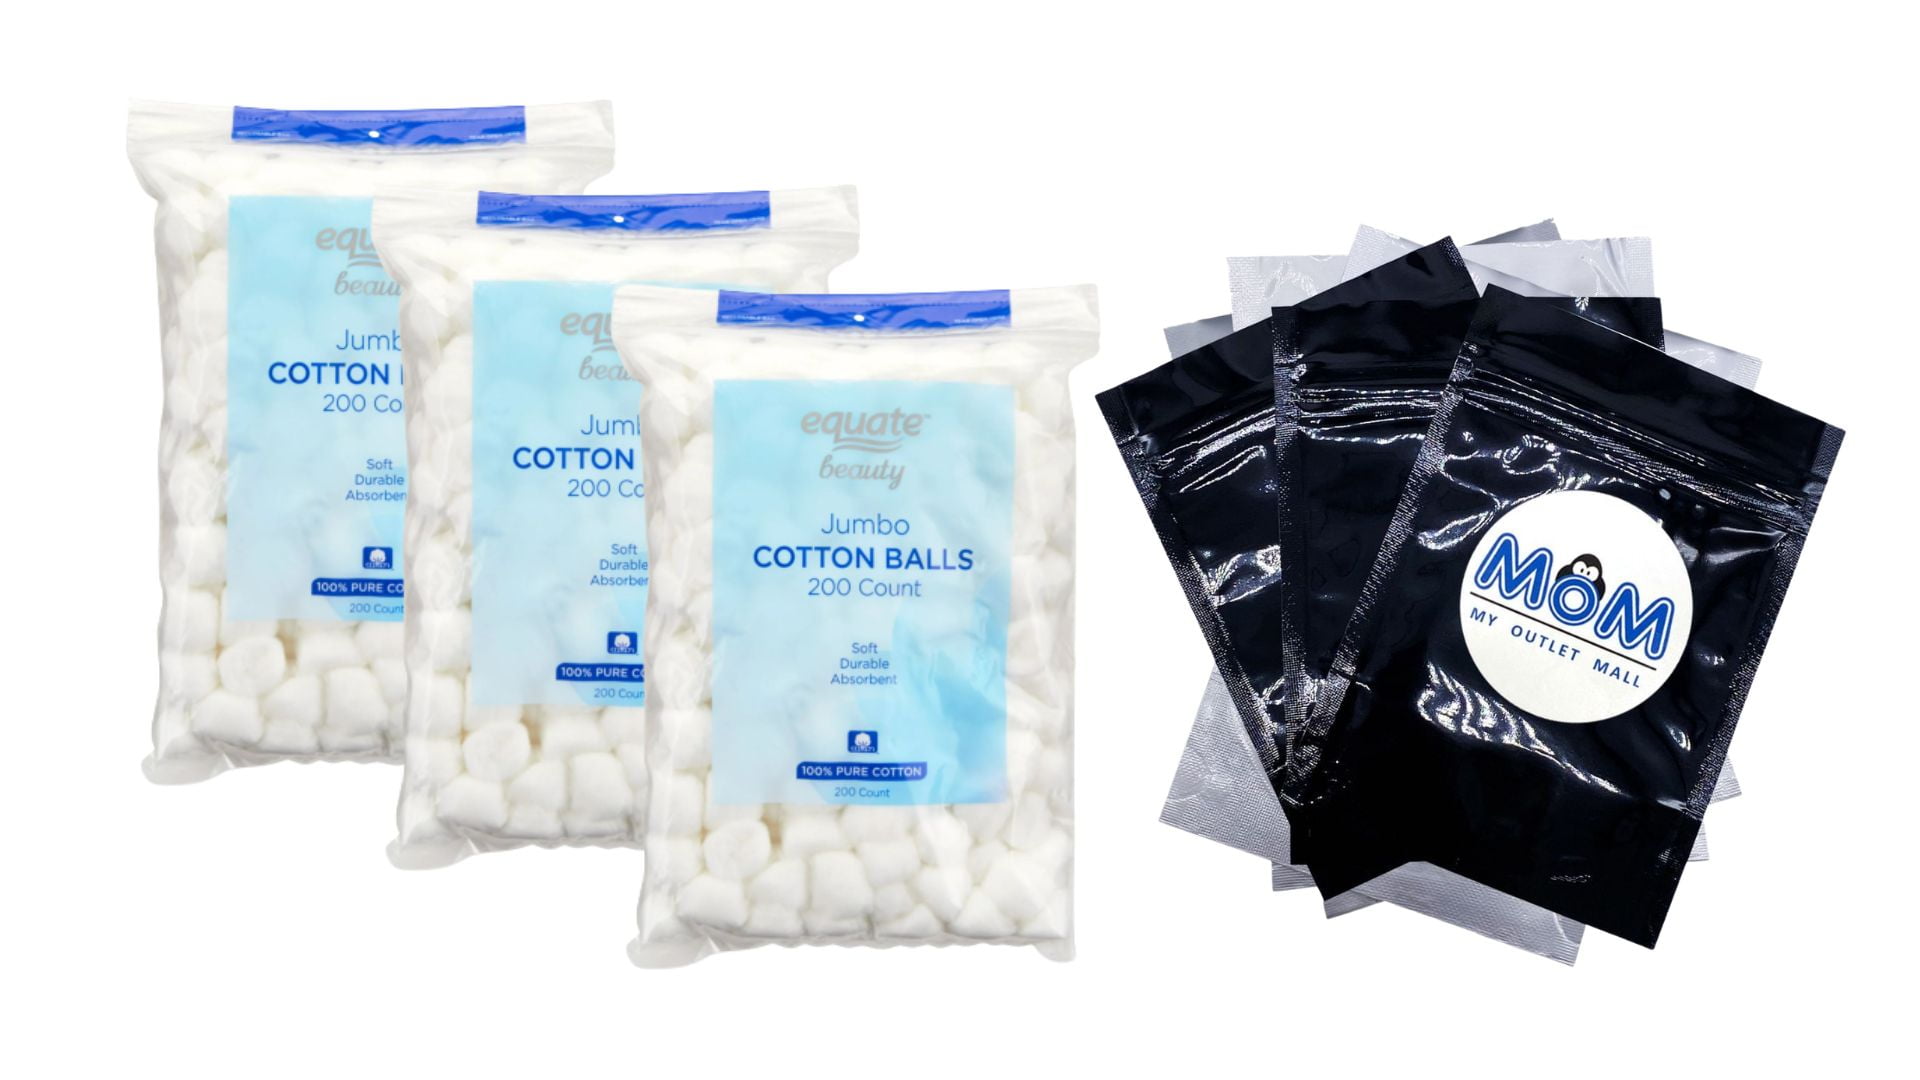 Assured Cotton Balls Jumbo Size 100% Pure Cotton - 100 Count